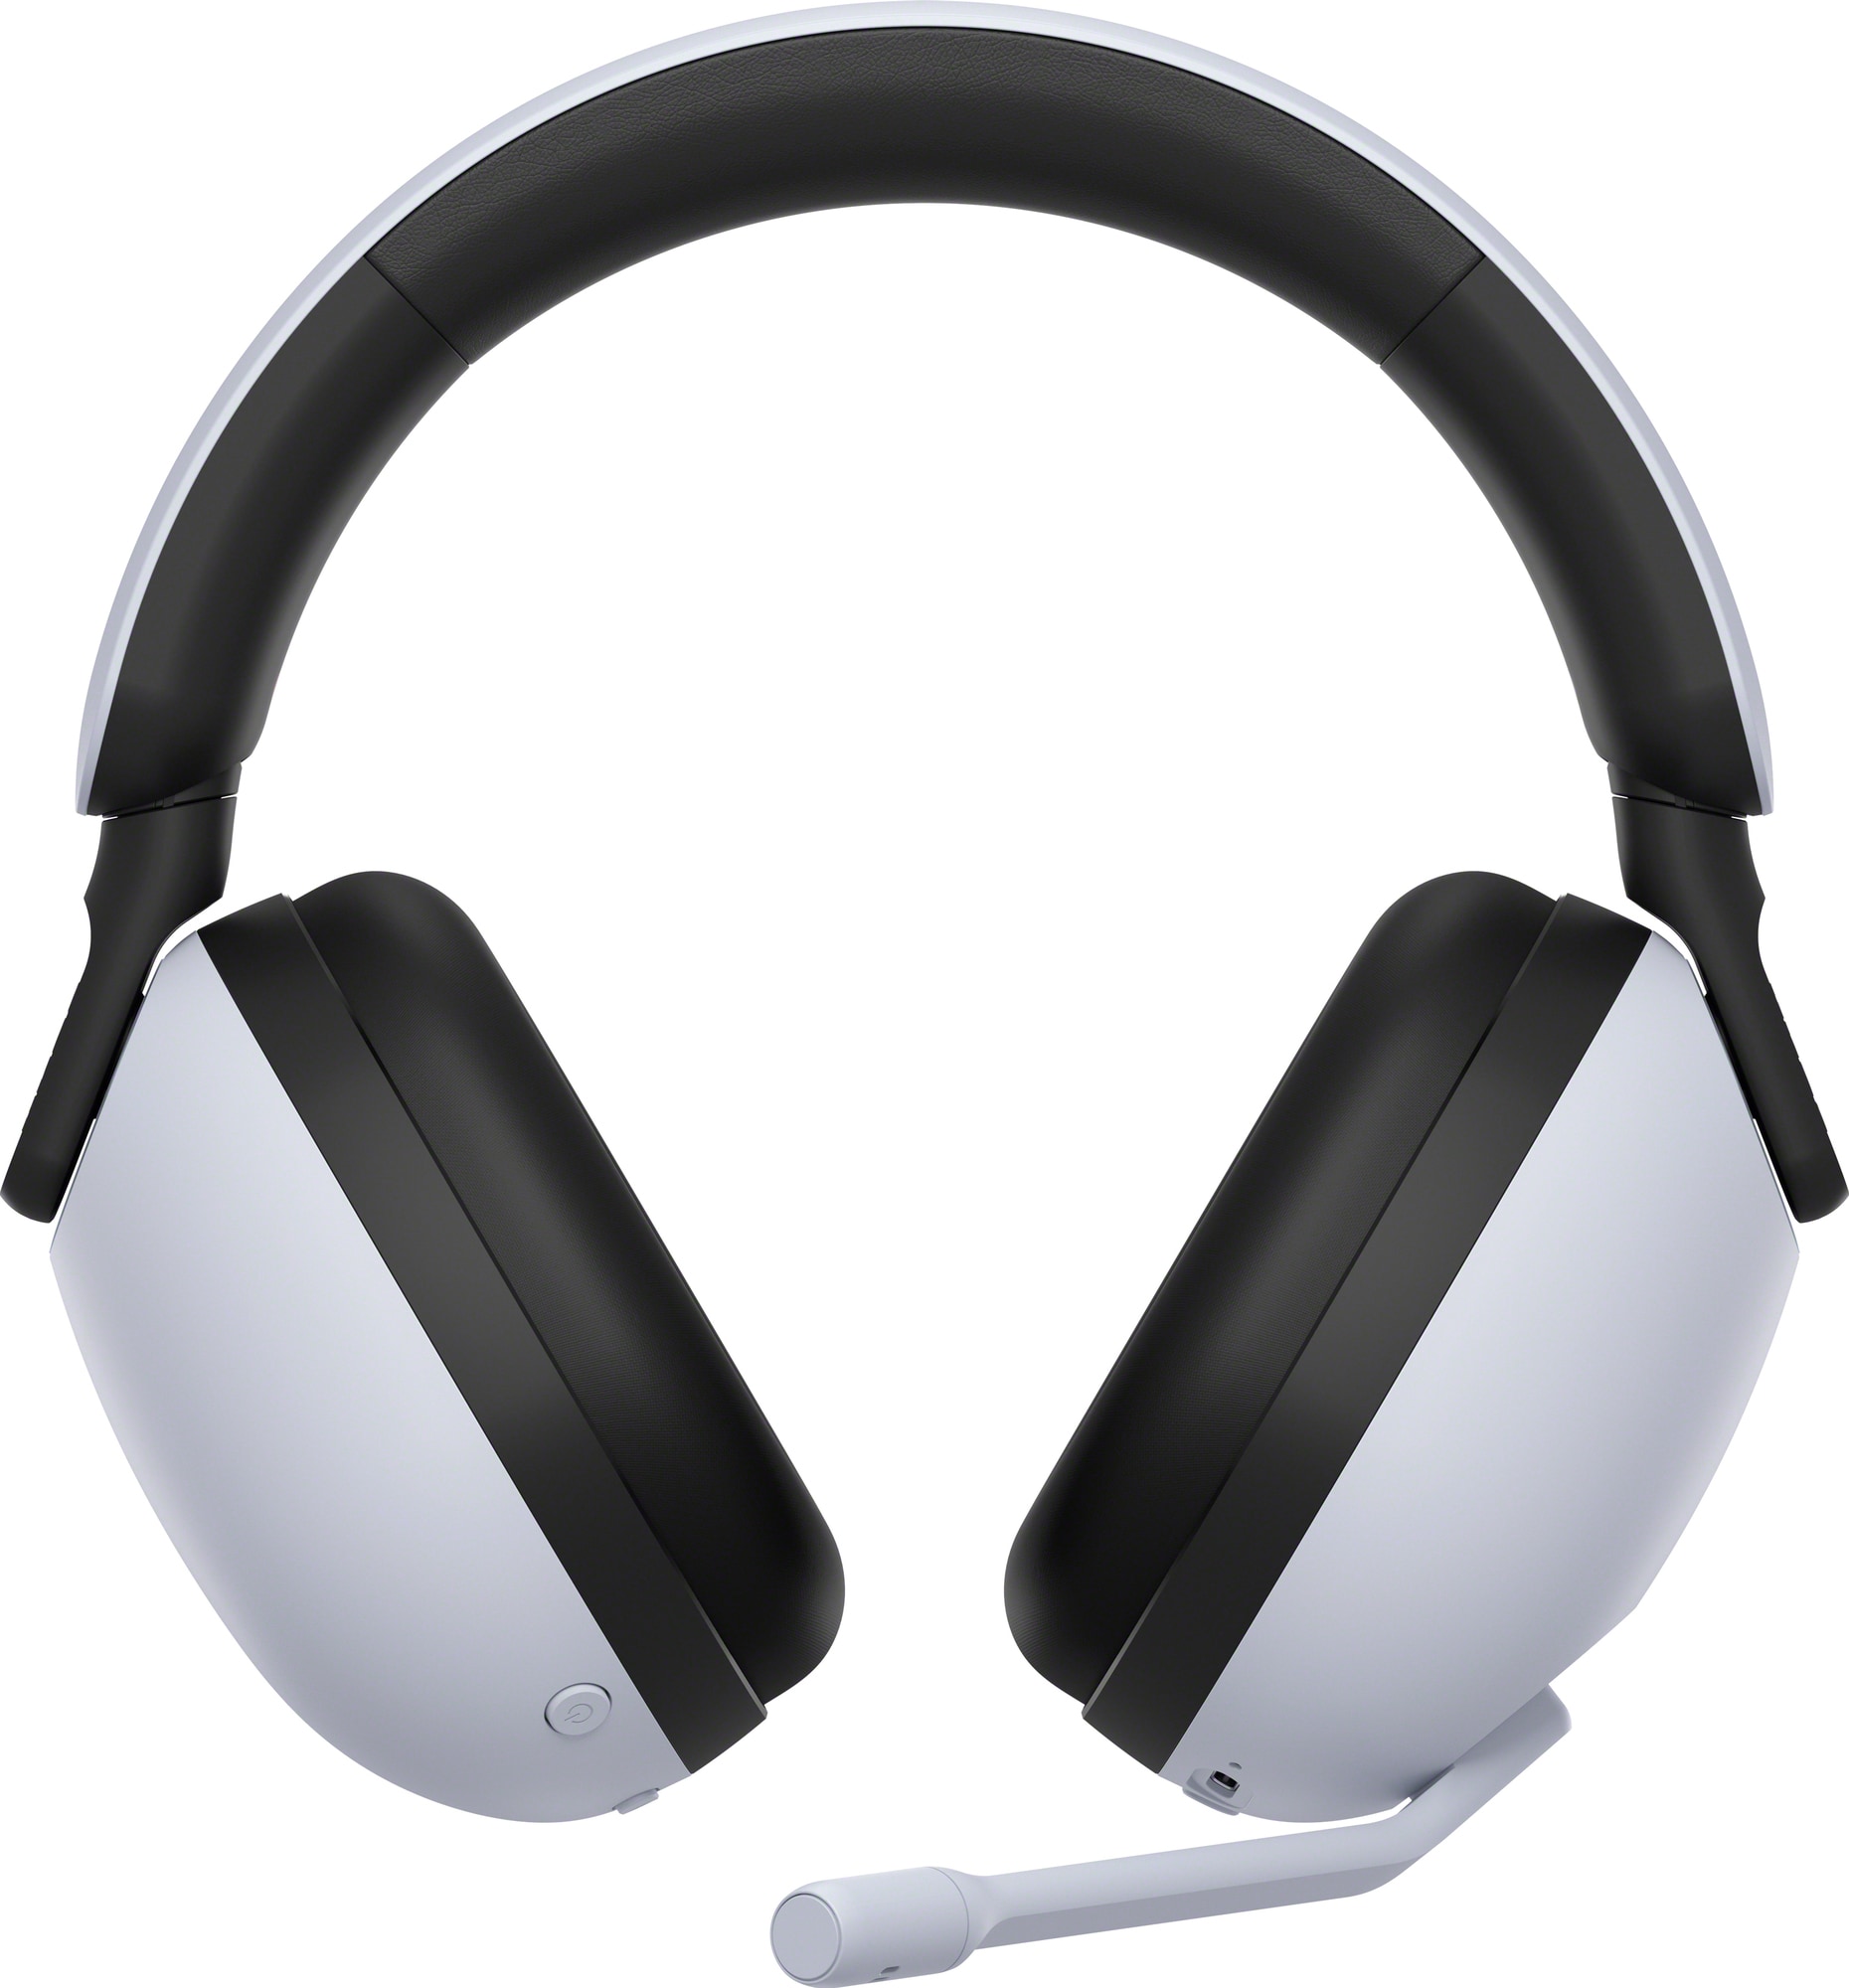 Sony Inzone H9 trådløst gaming headset | Elgiganten